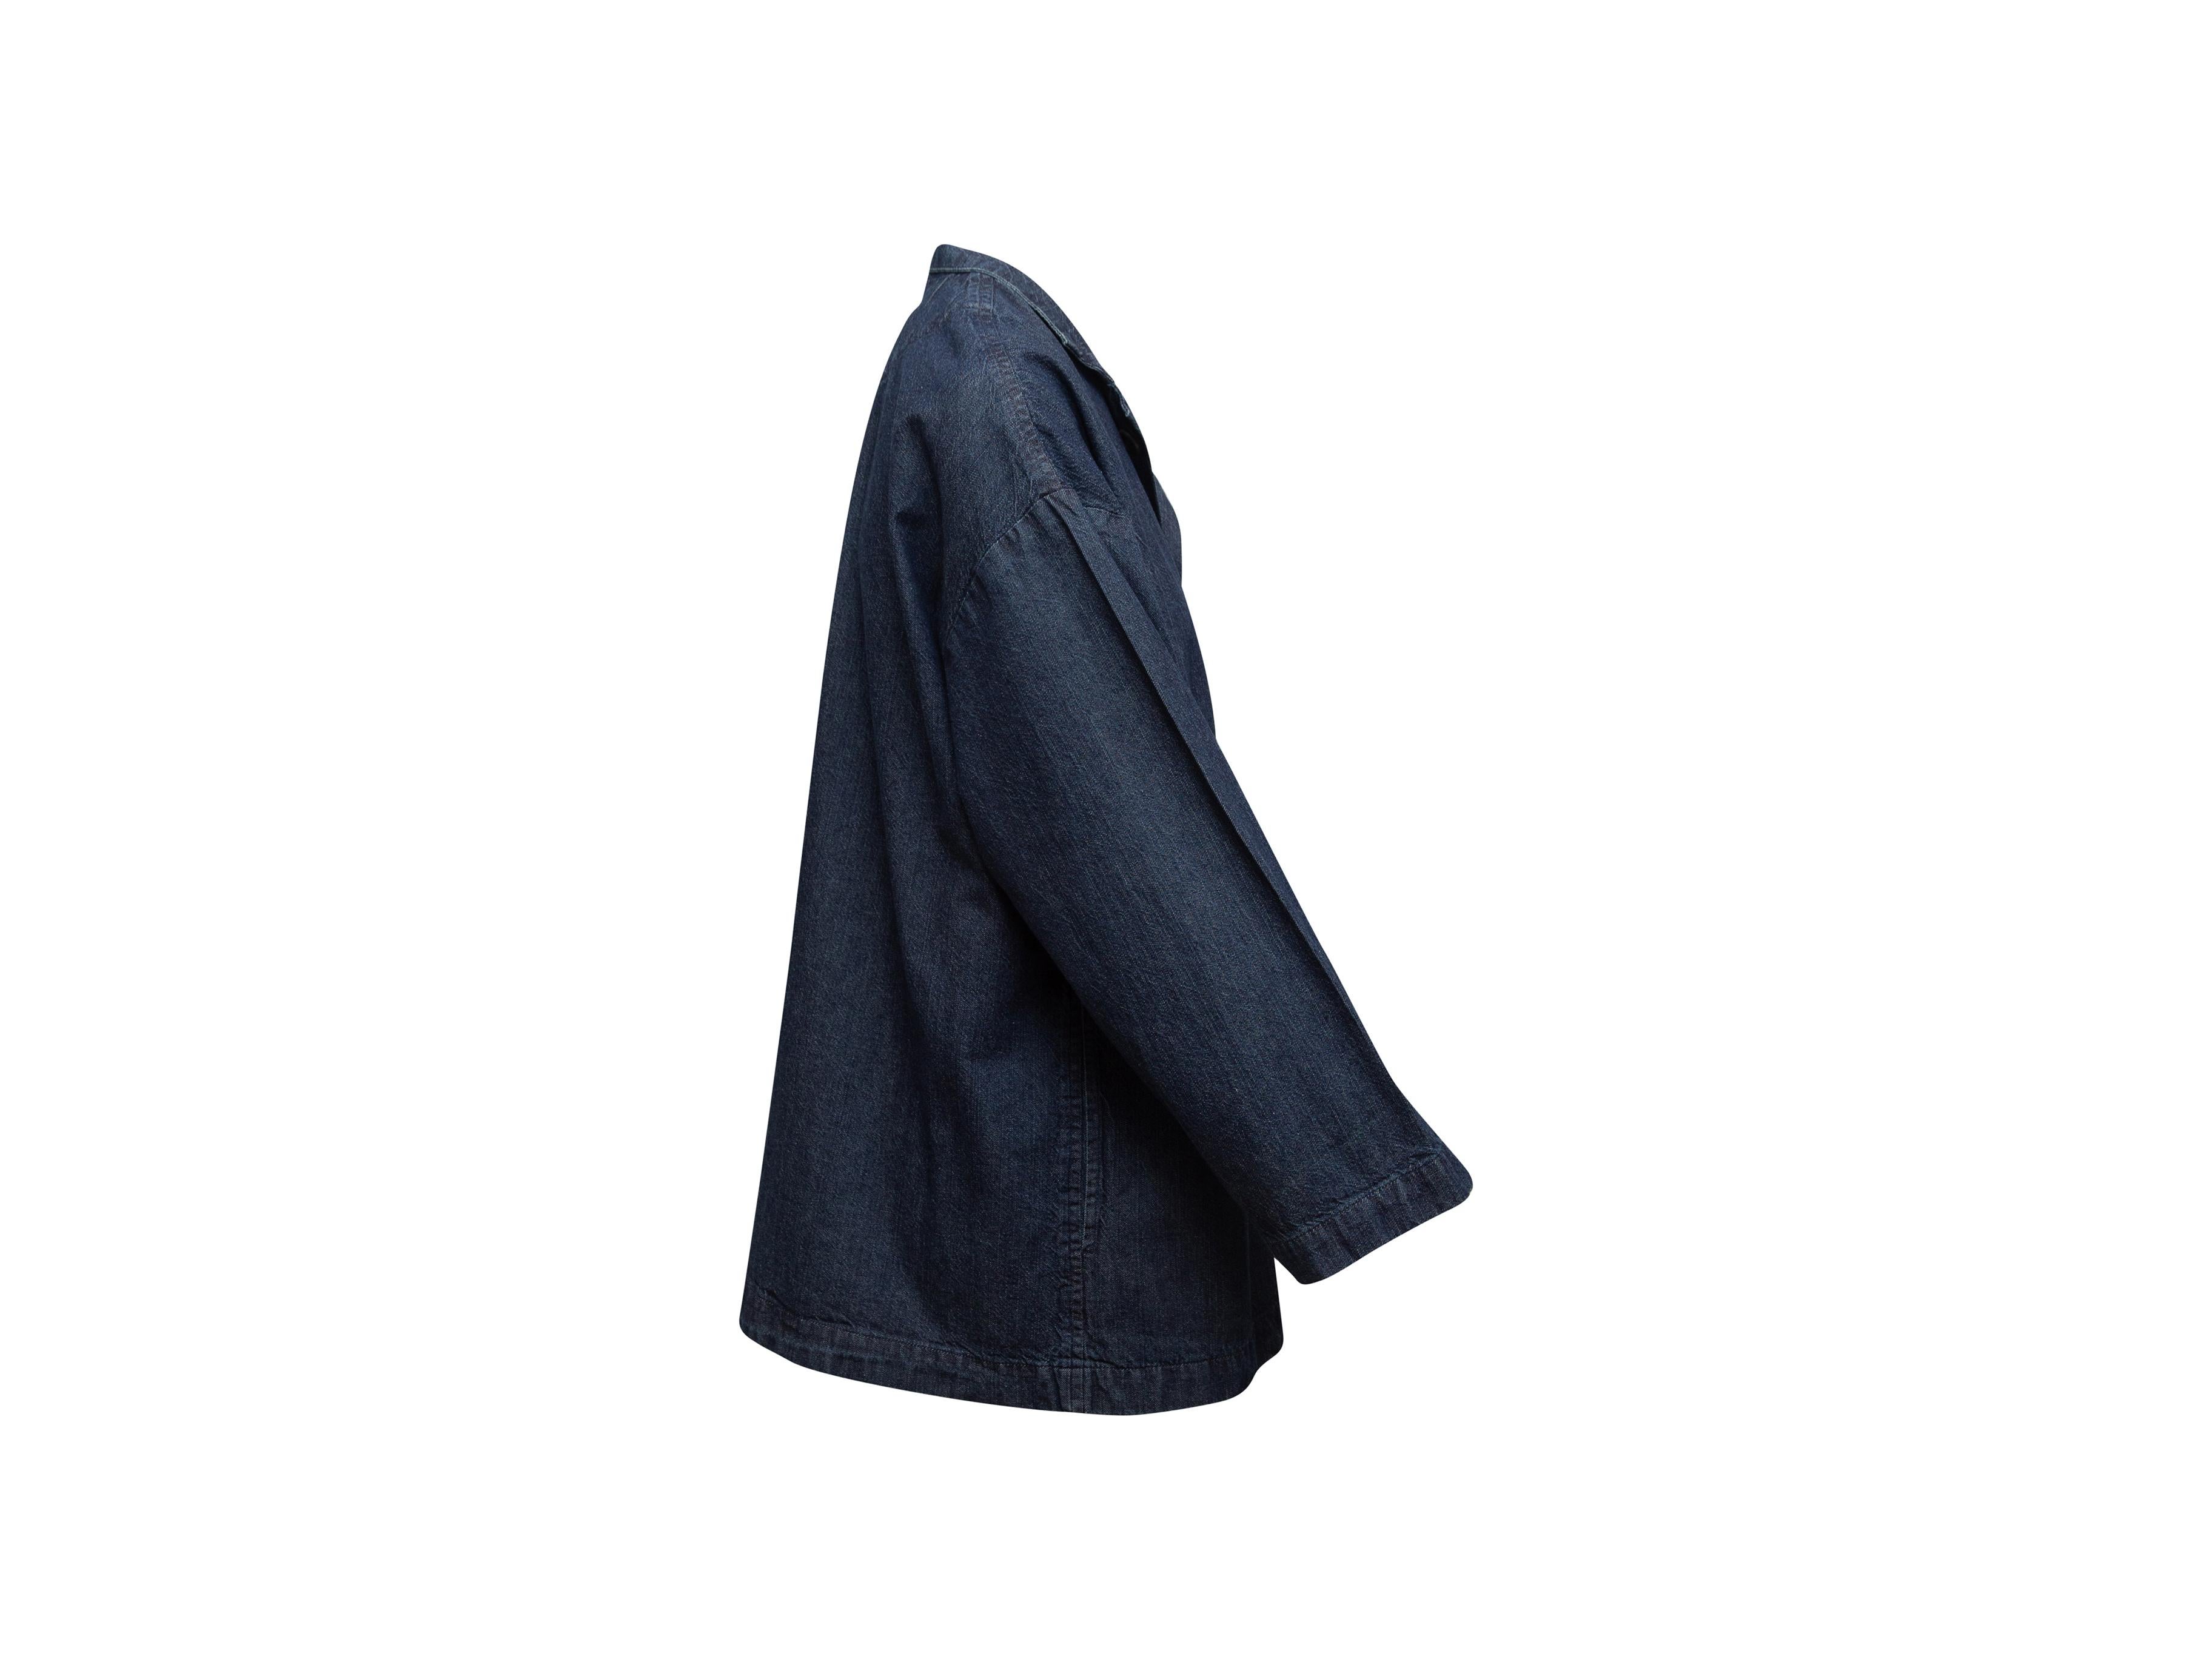 Product details: Dark blue denim chore coat by Eskandar. Notched collar. Dual patch pockets. Button closures at center front. 51